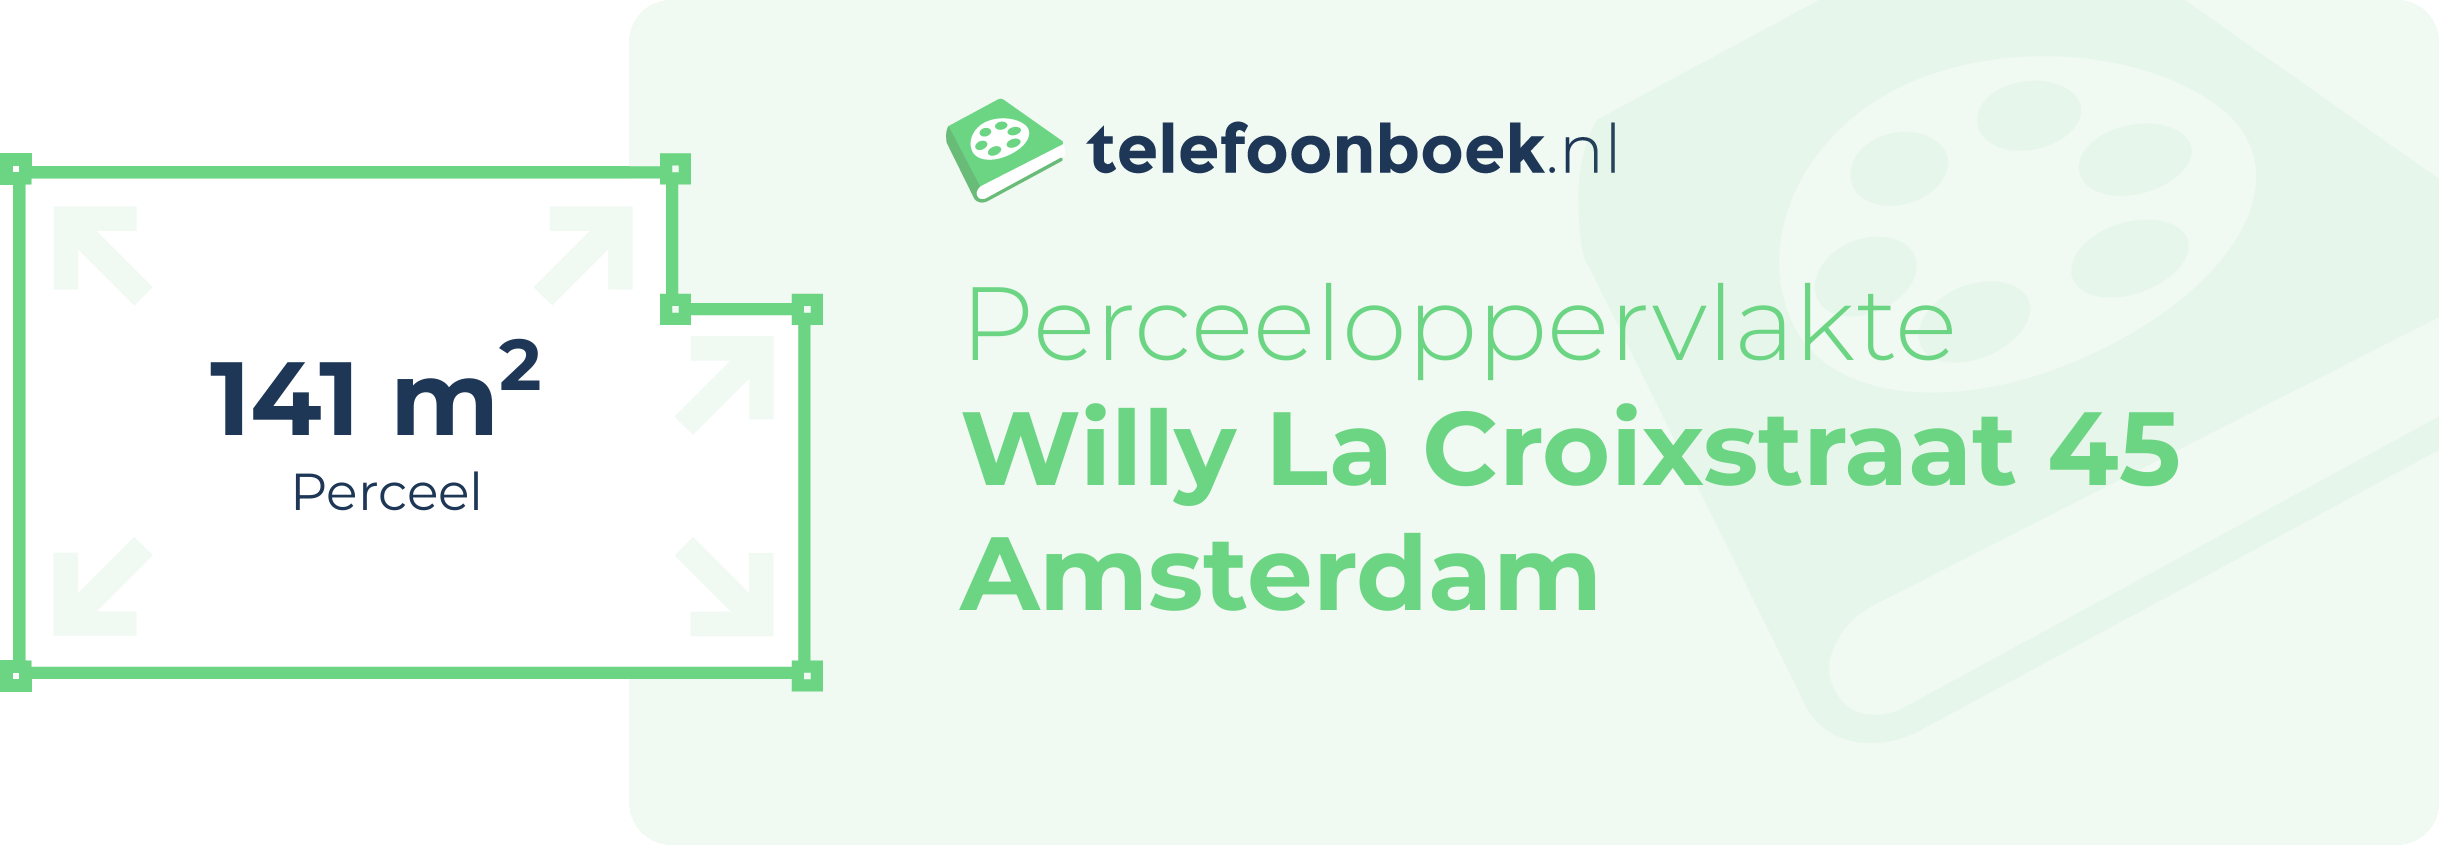 Perceeloppervlakte Willy La Croixstraat 45 Amsterdam